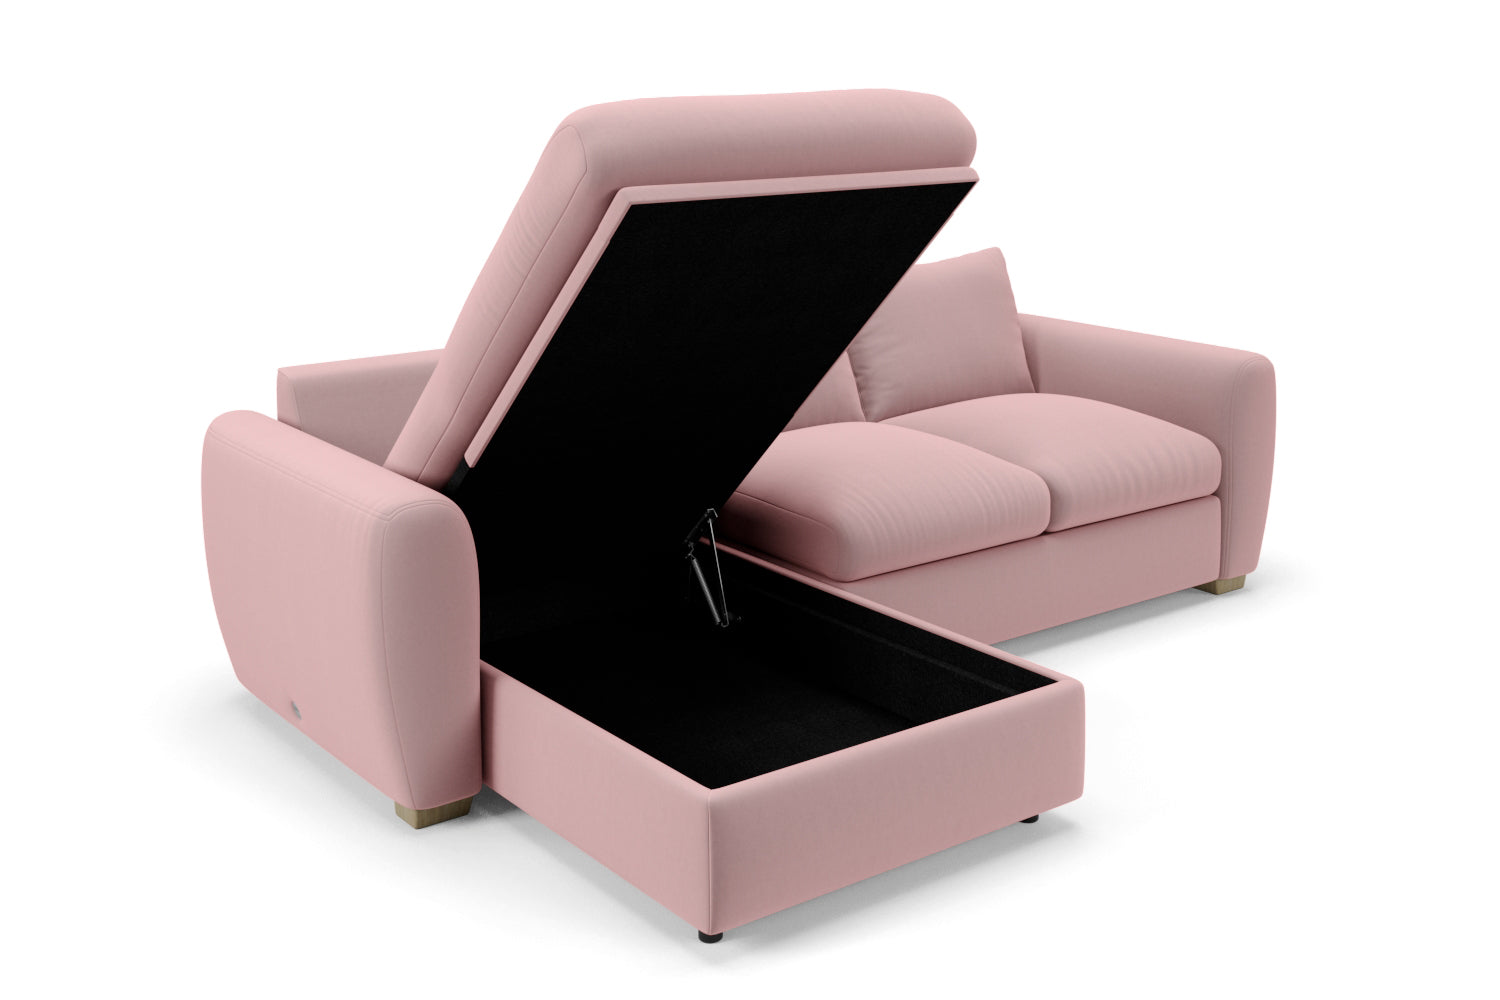 SNUG | The Cloud Sundae Chaise Corner Sofa in Blush variant_40575169200176